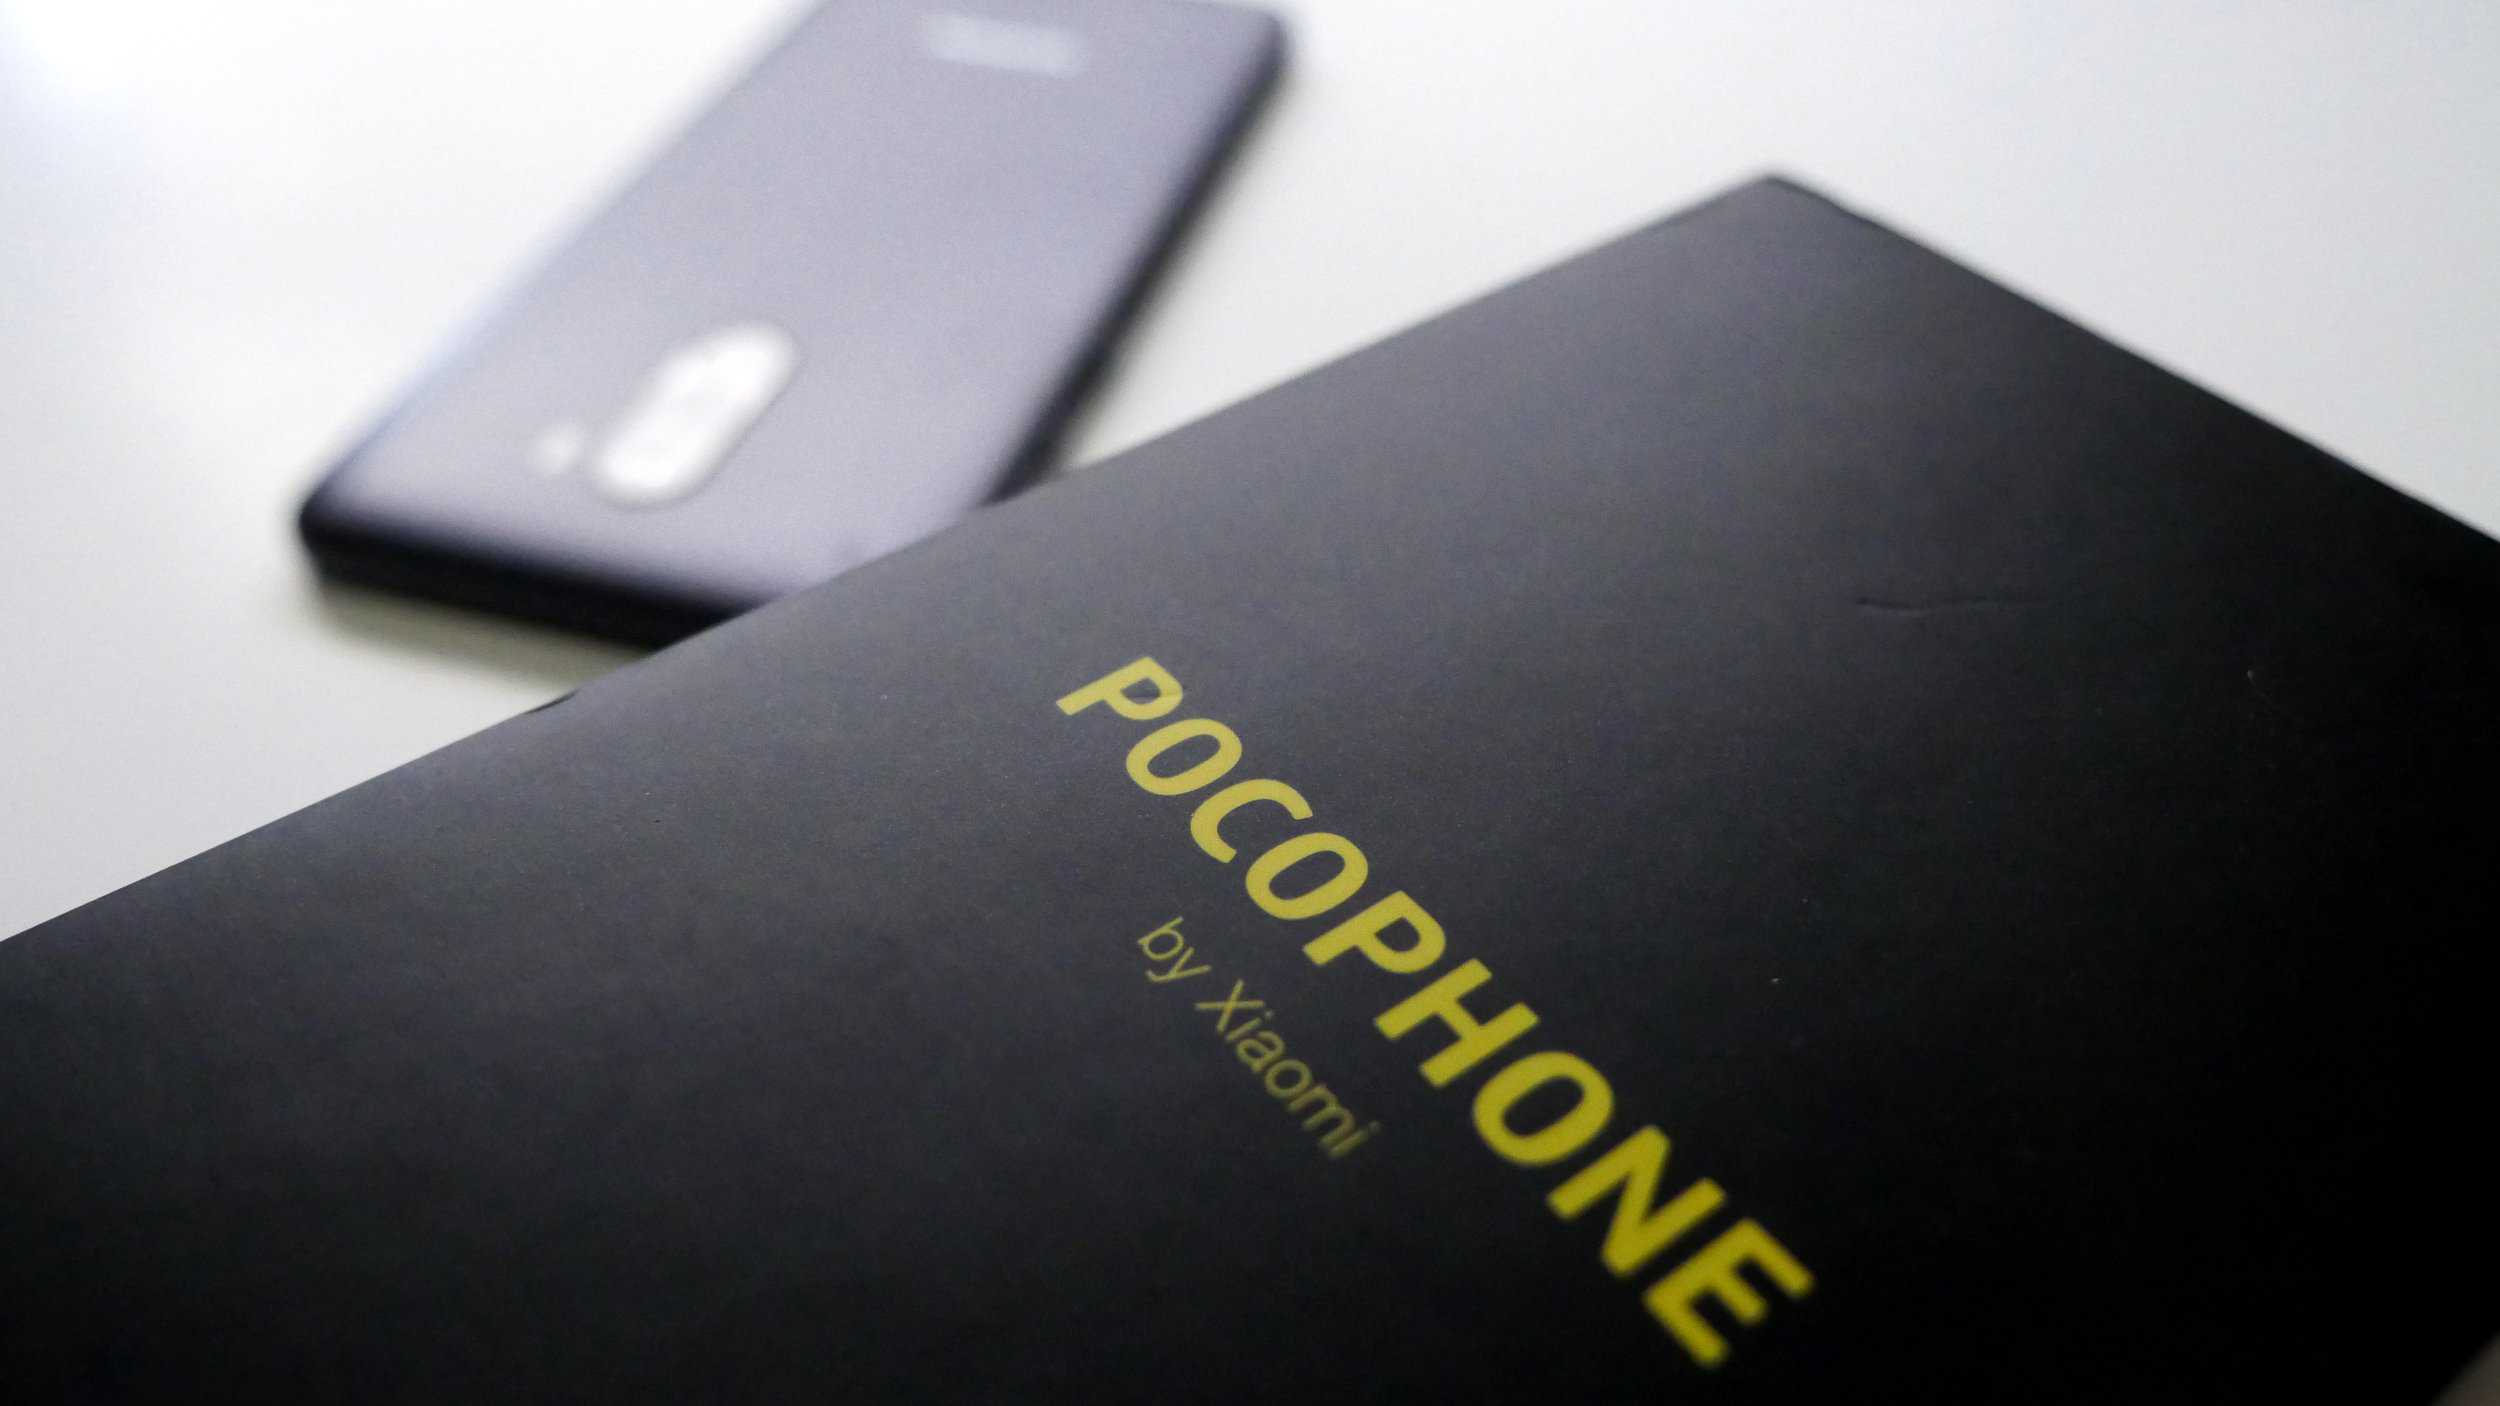 PocoPhone